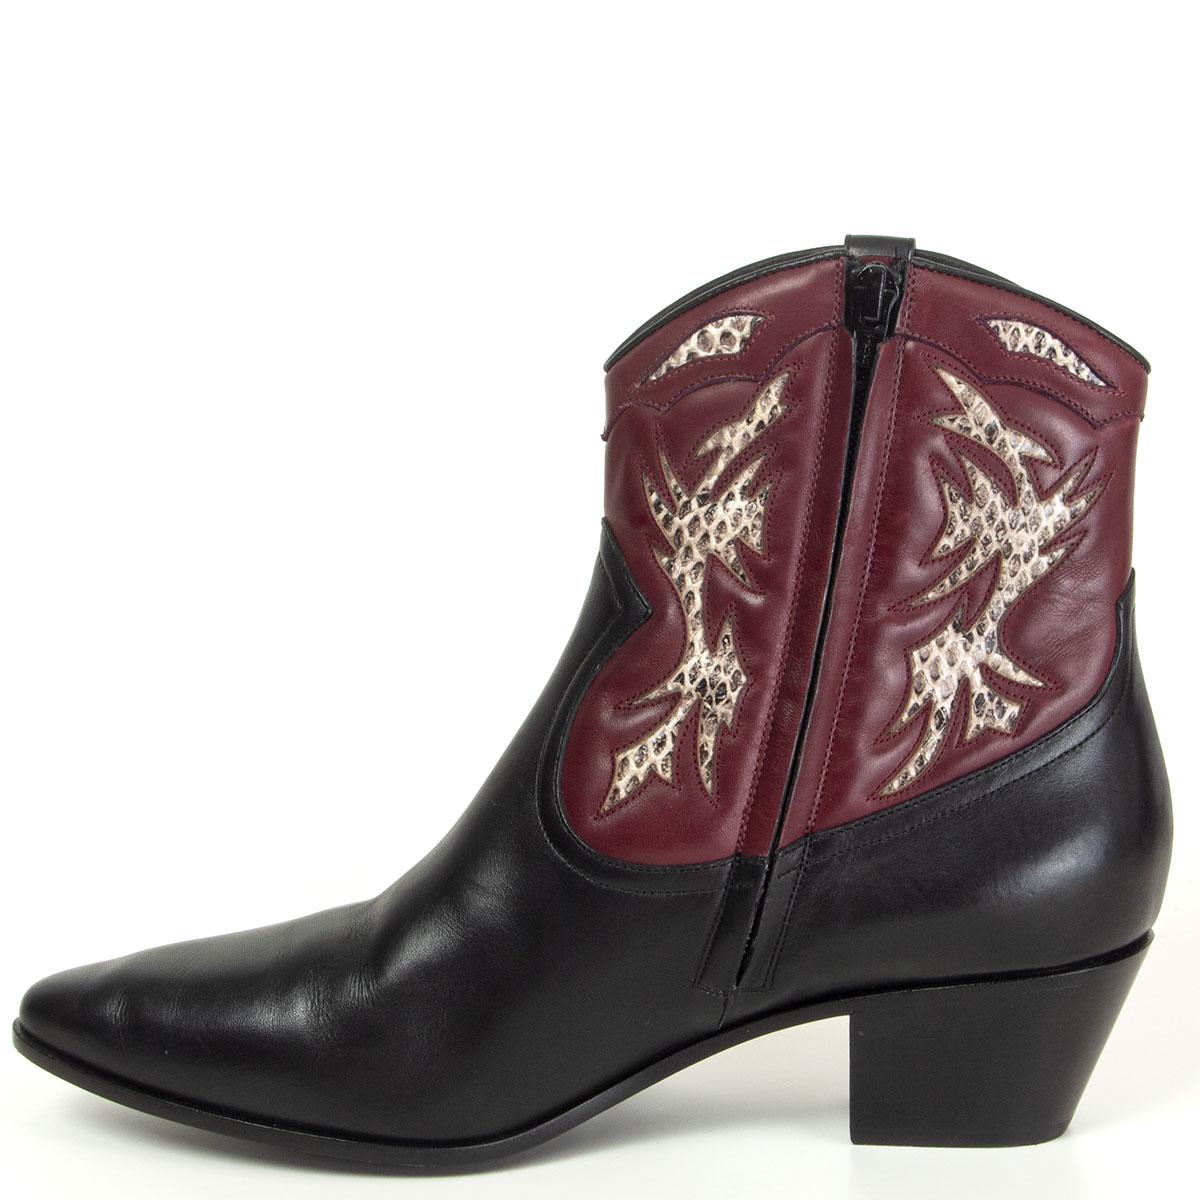 Black SAINT LAURENT black & burgundy leather ROCK 40 Western Ankle Boots Shoes 39.5